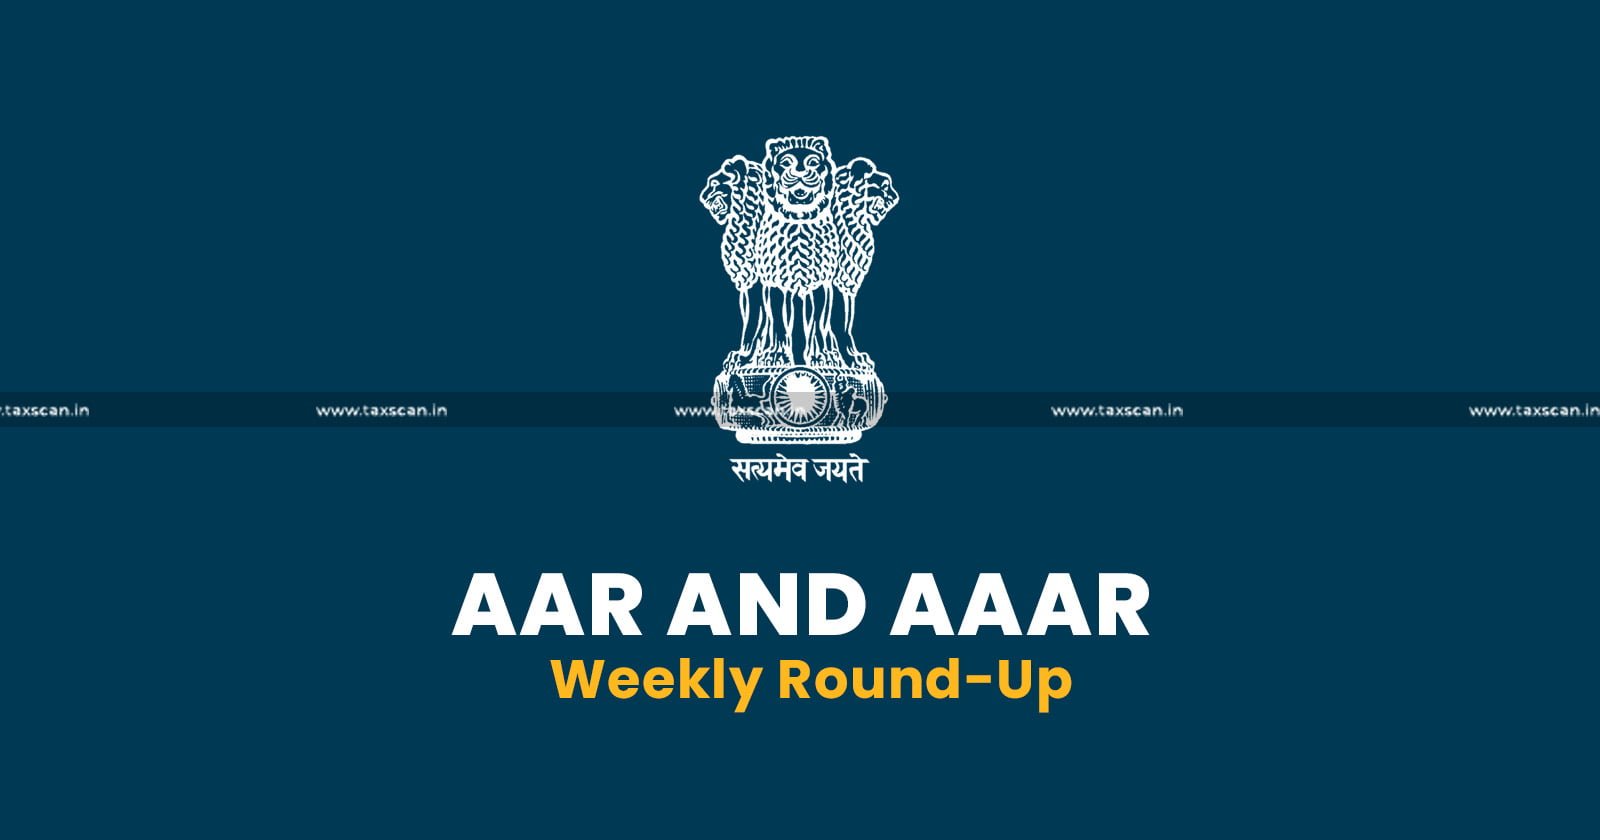 AAR and AAAR weekly Round-up - AAAR weekly Round-up - AAR weekly Round-up - AAAR - AAR - Appellate Authority for Advance Ruling - Taxscan